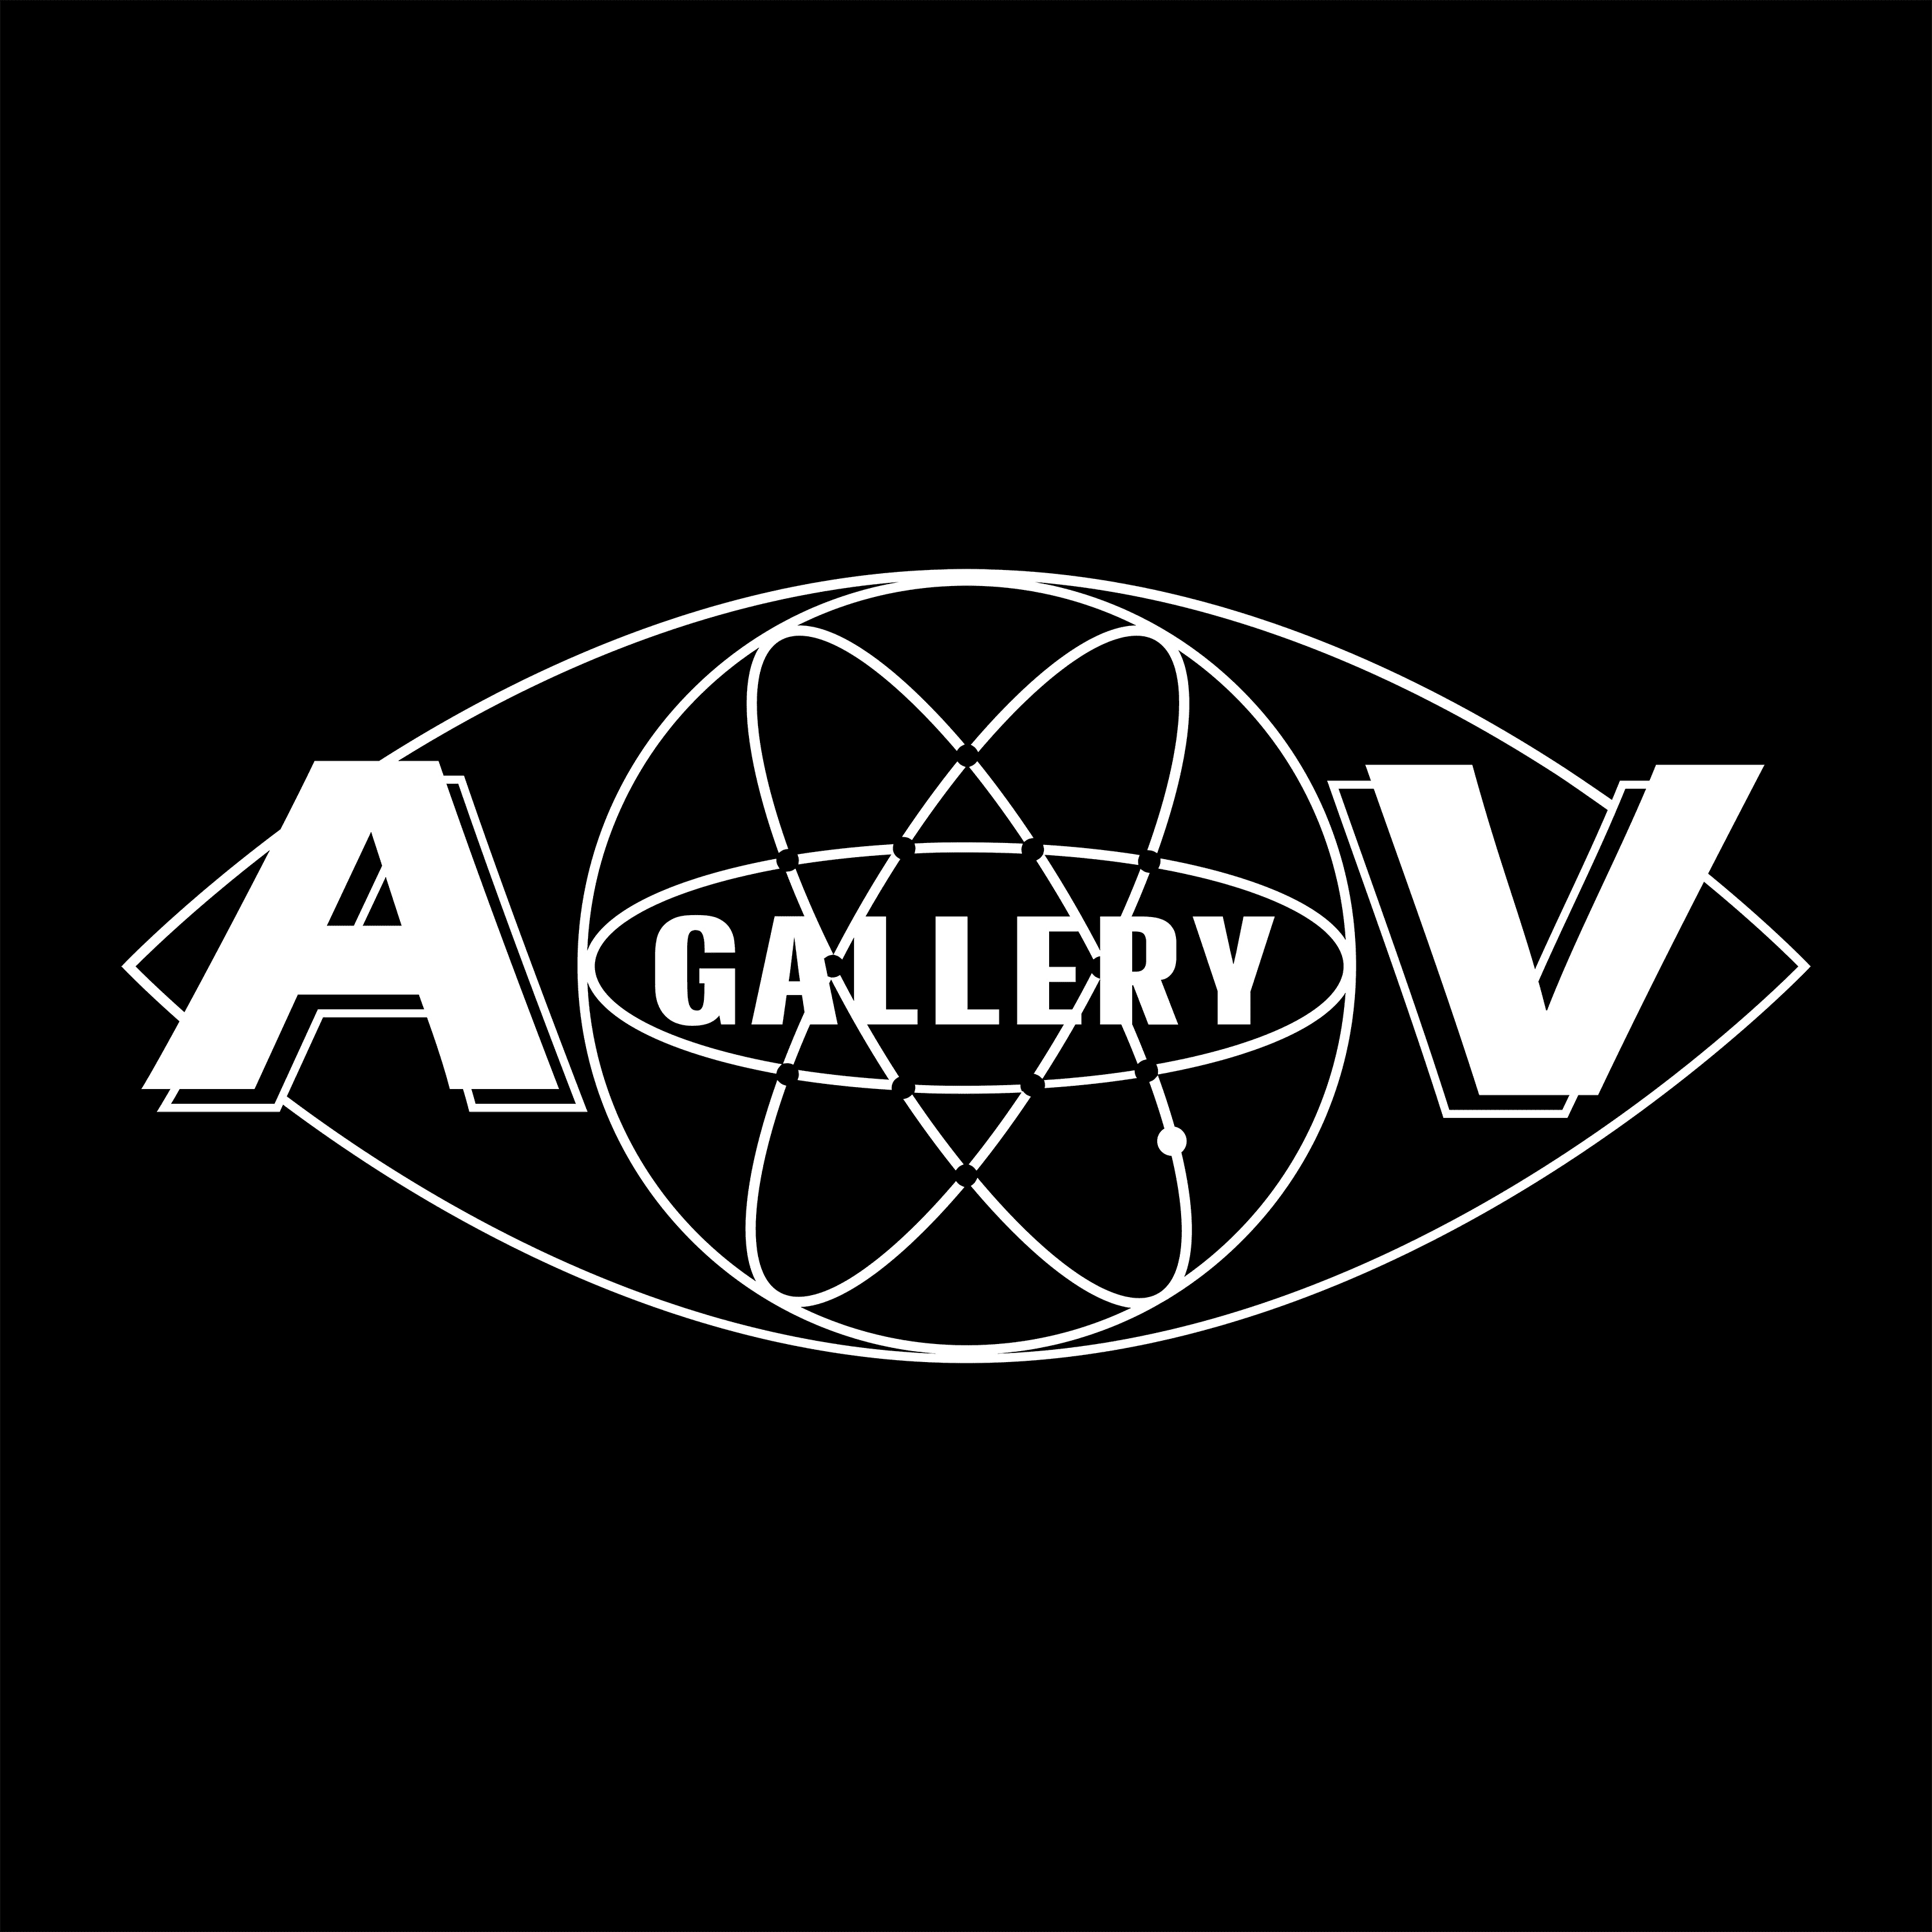 AudioVisual_GALLERY 横幅